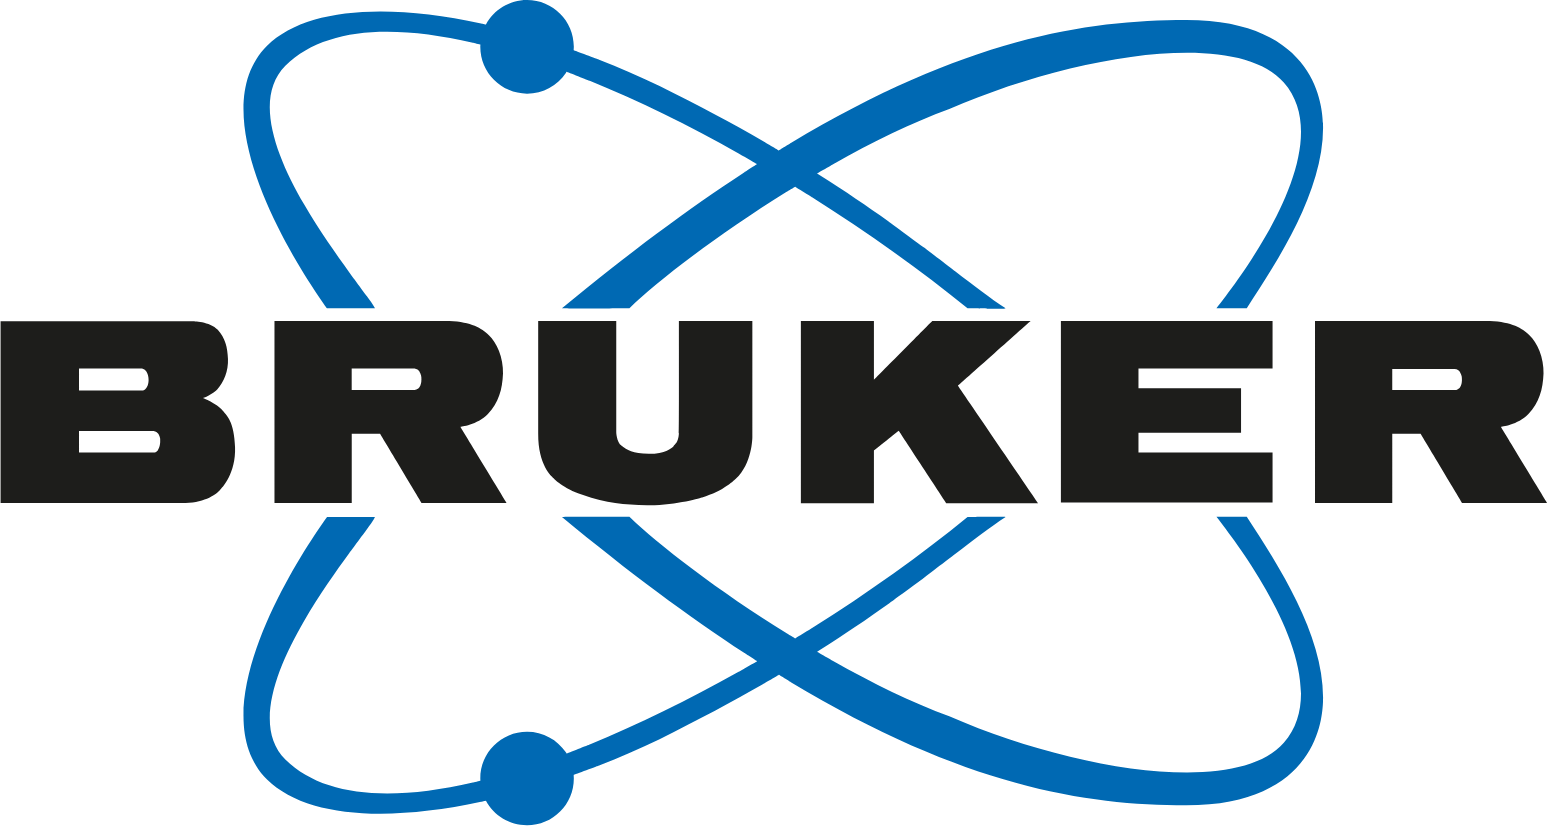 Bruker logo (PNG transparent)